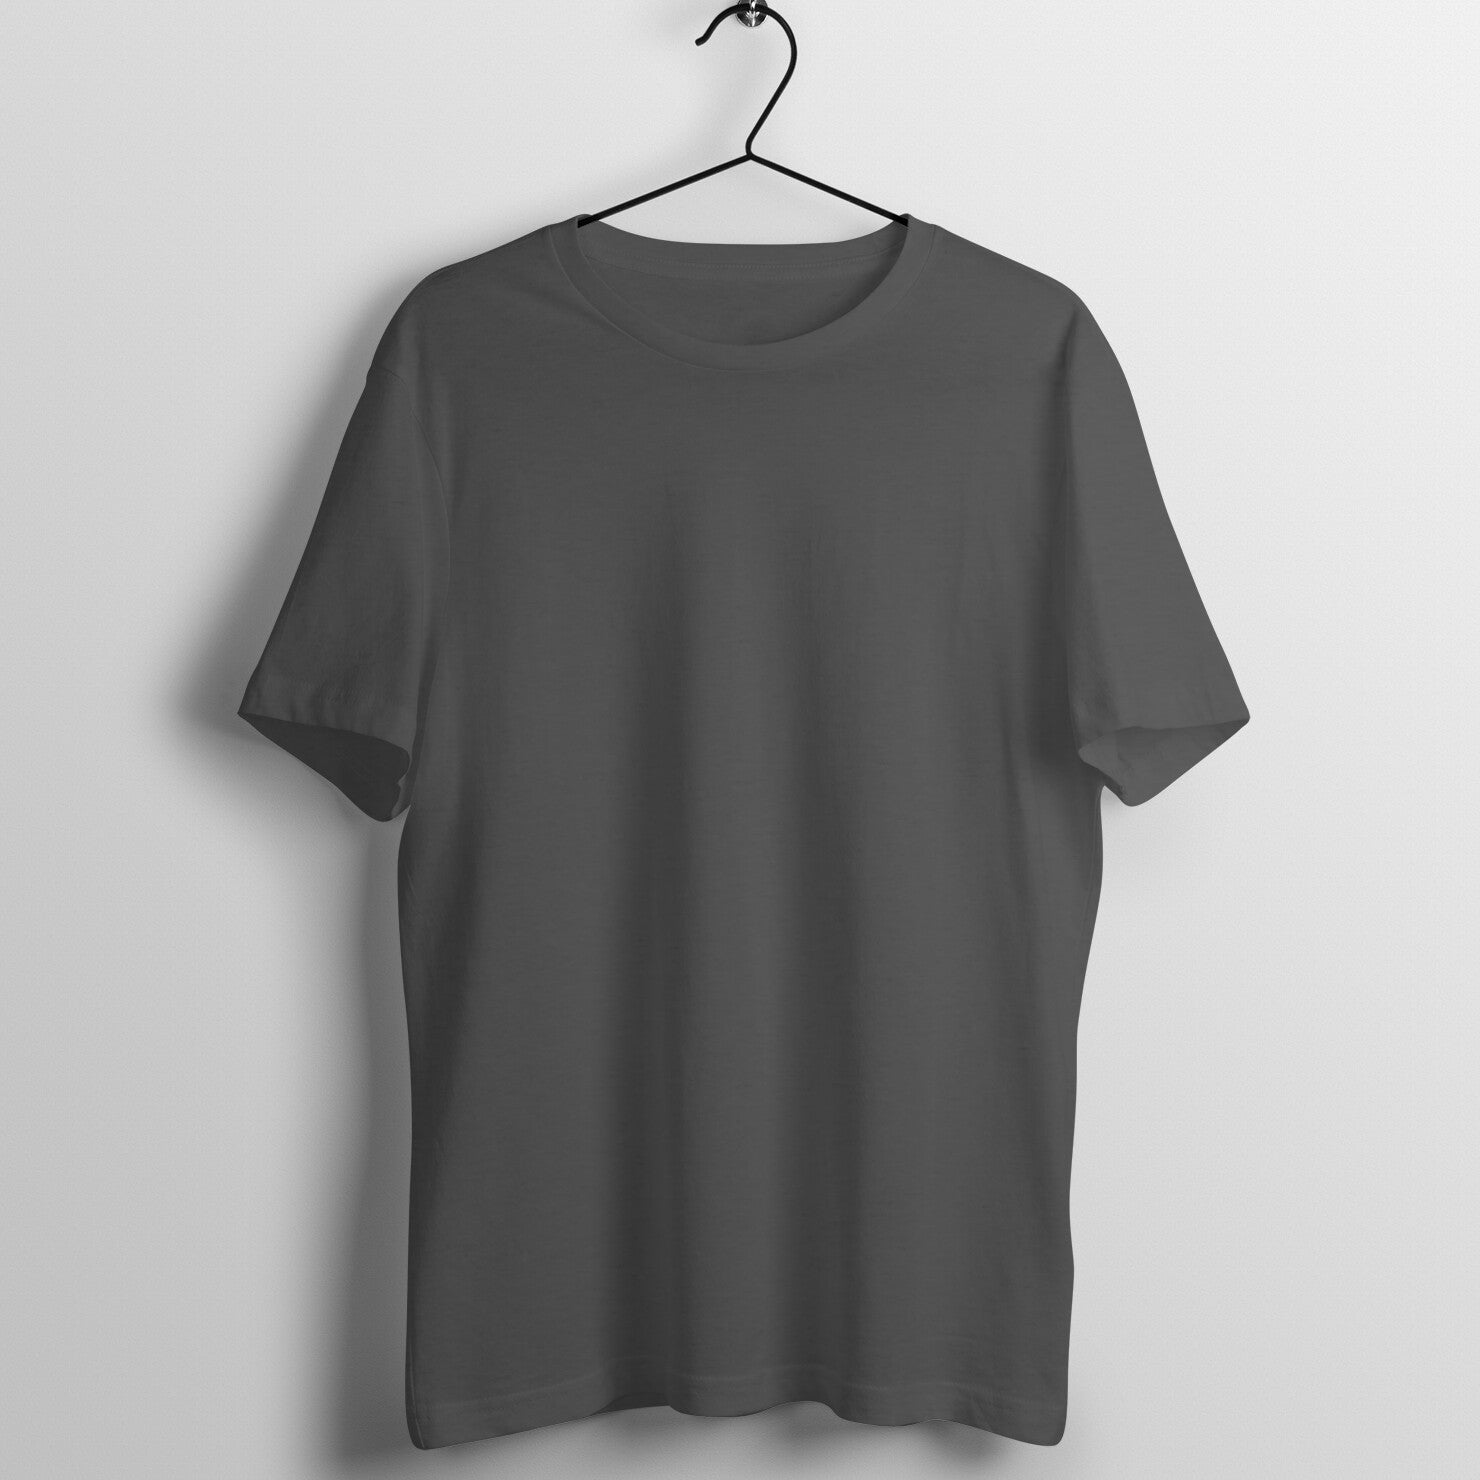 Charcoal grey mens t shirt, Plain t shirts for men